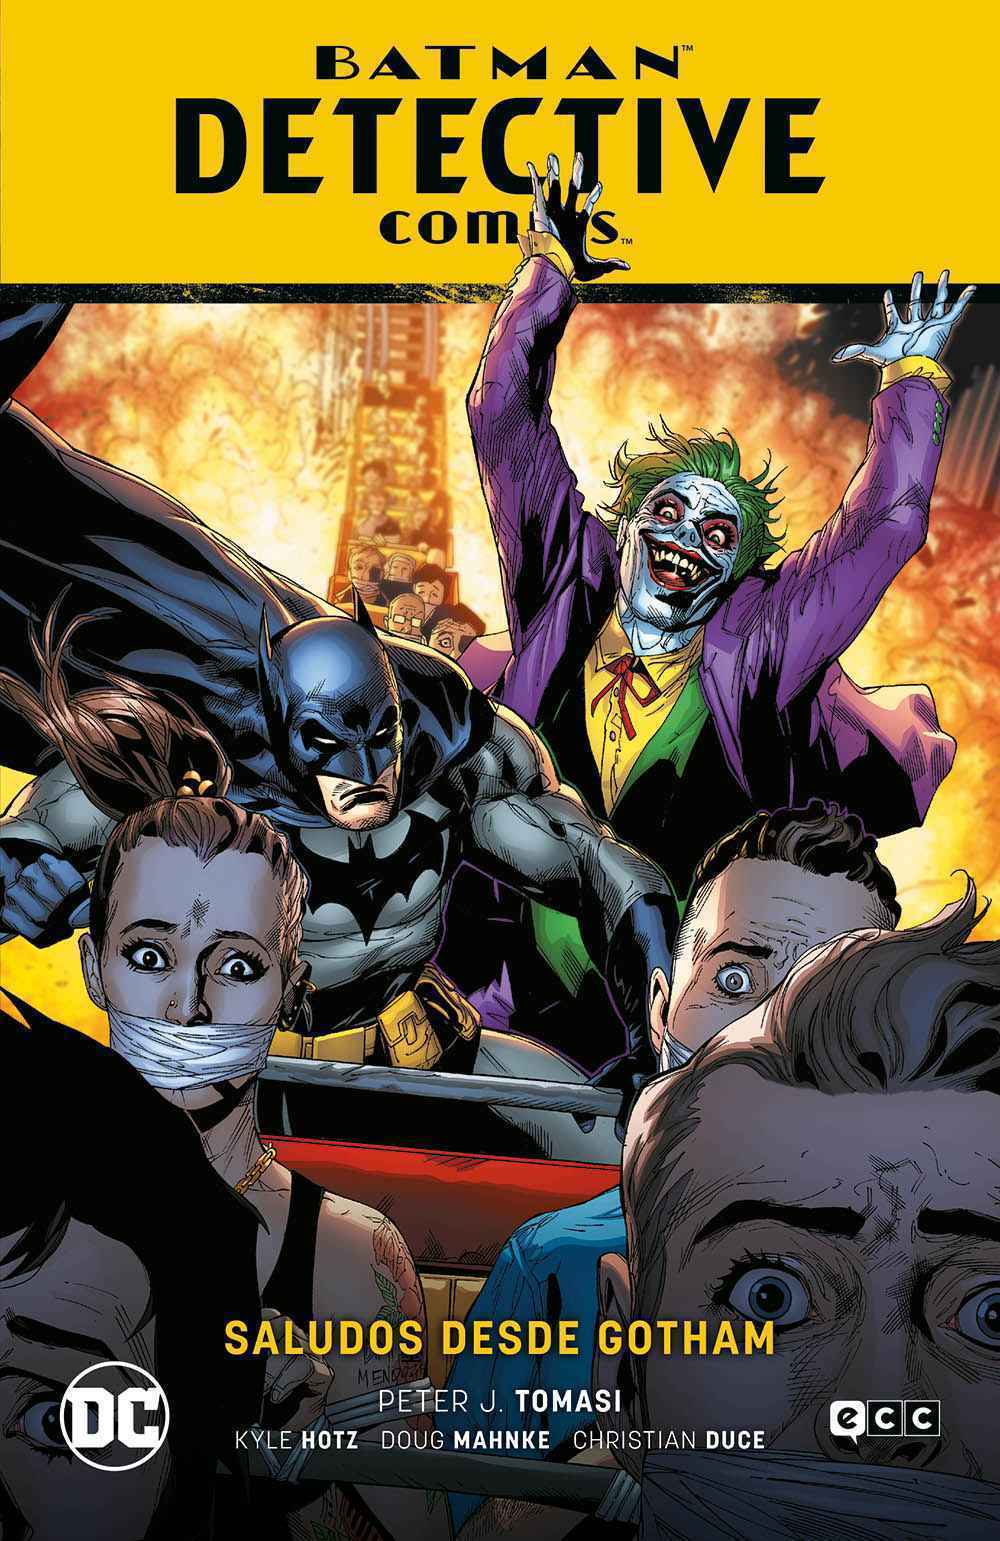 Nombre provisional Confinar veredicto BATMAN: DETECTIVE COMICS VOL. 11 - SALUDOS DESDE GOTHAM (EL AÑO DEL VILLANO  PARTE 3) - Futurama Comics